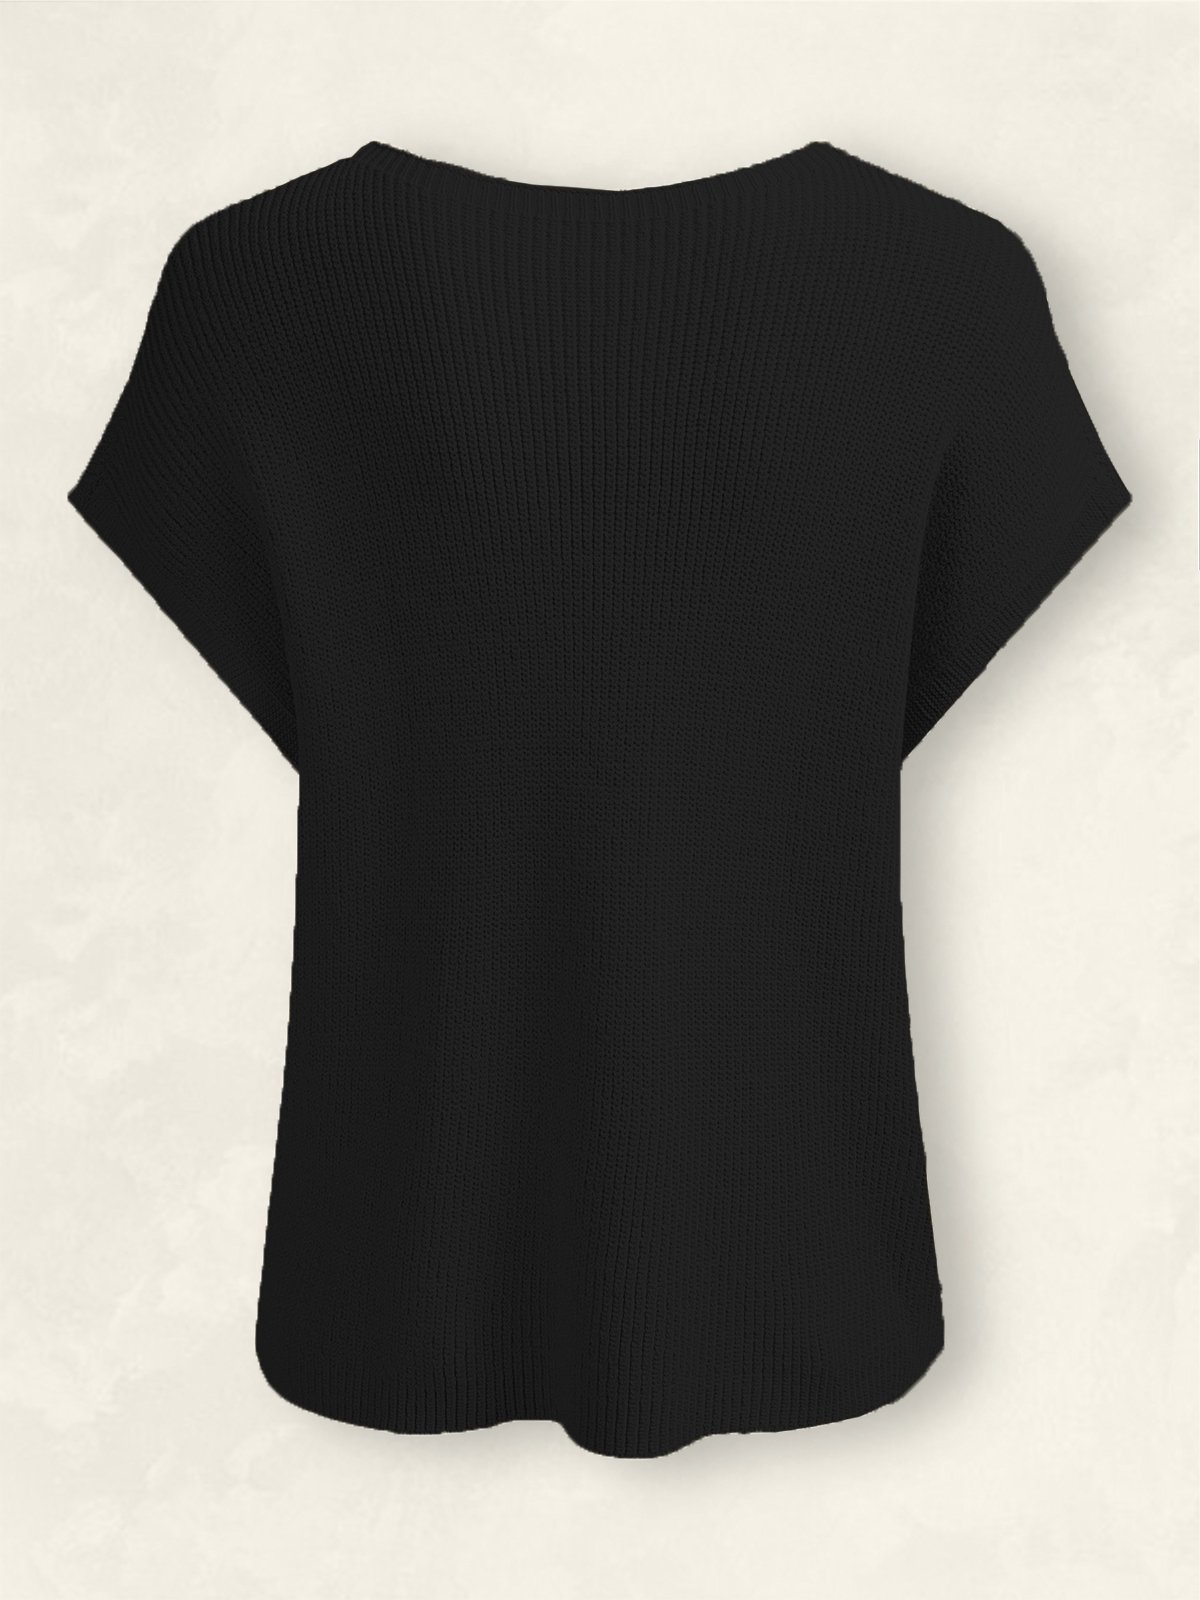 Women T-shirt Plain Short Sleeve Comfy Casual Sweater Top